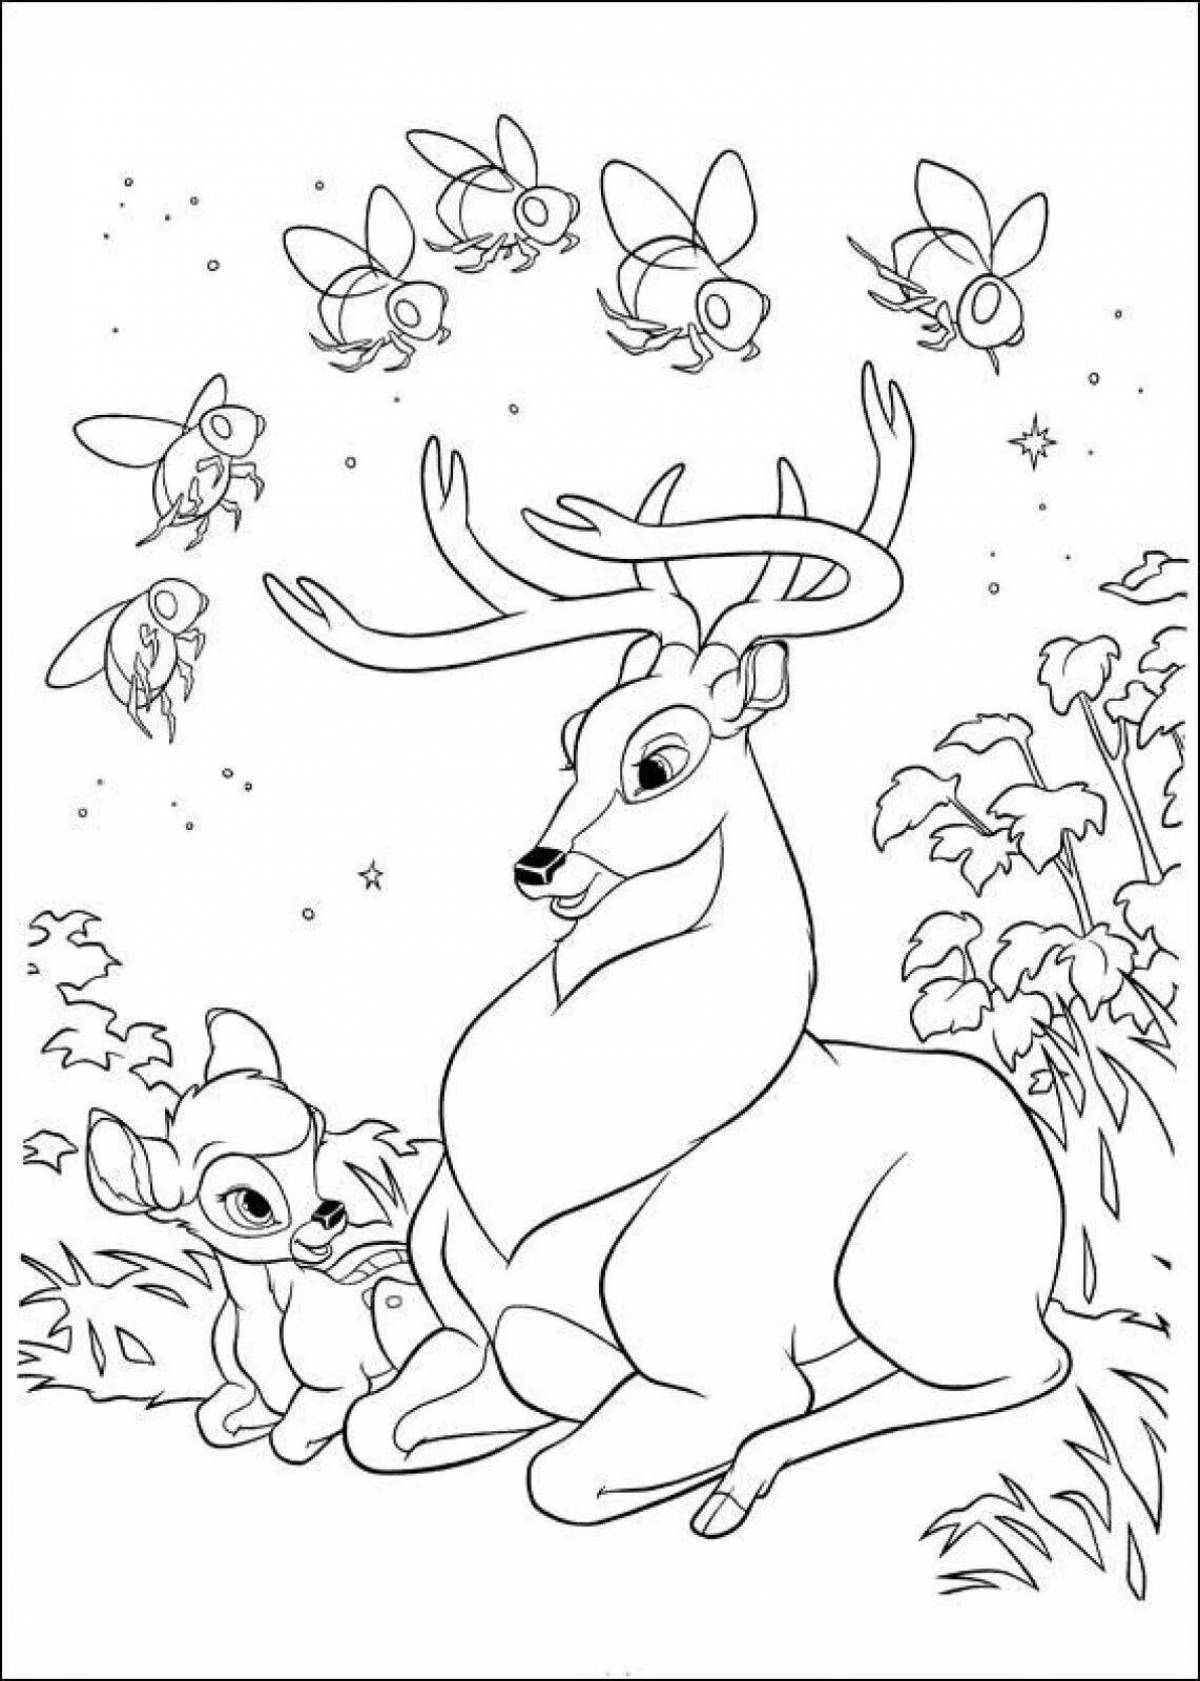 Fabulous bambi coloring book for kids